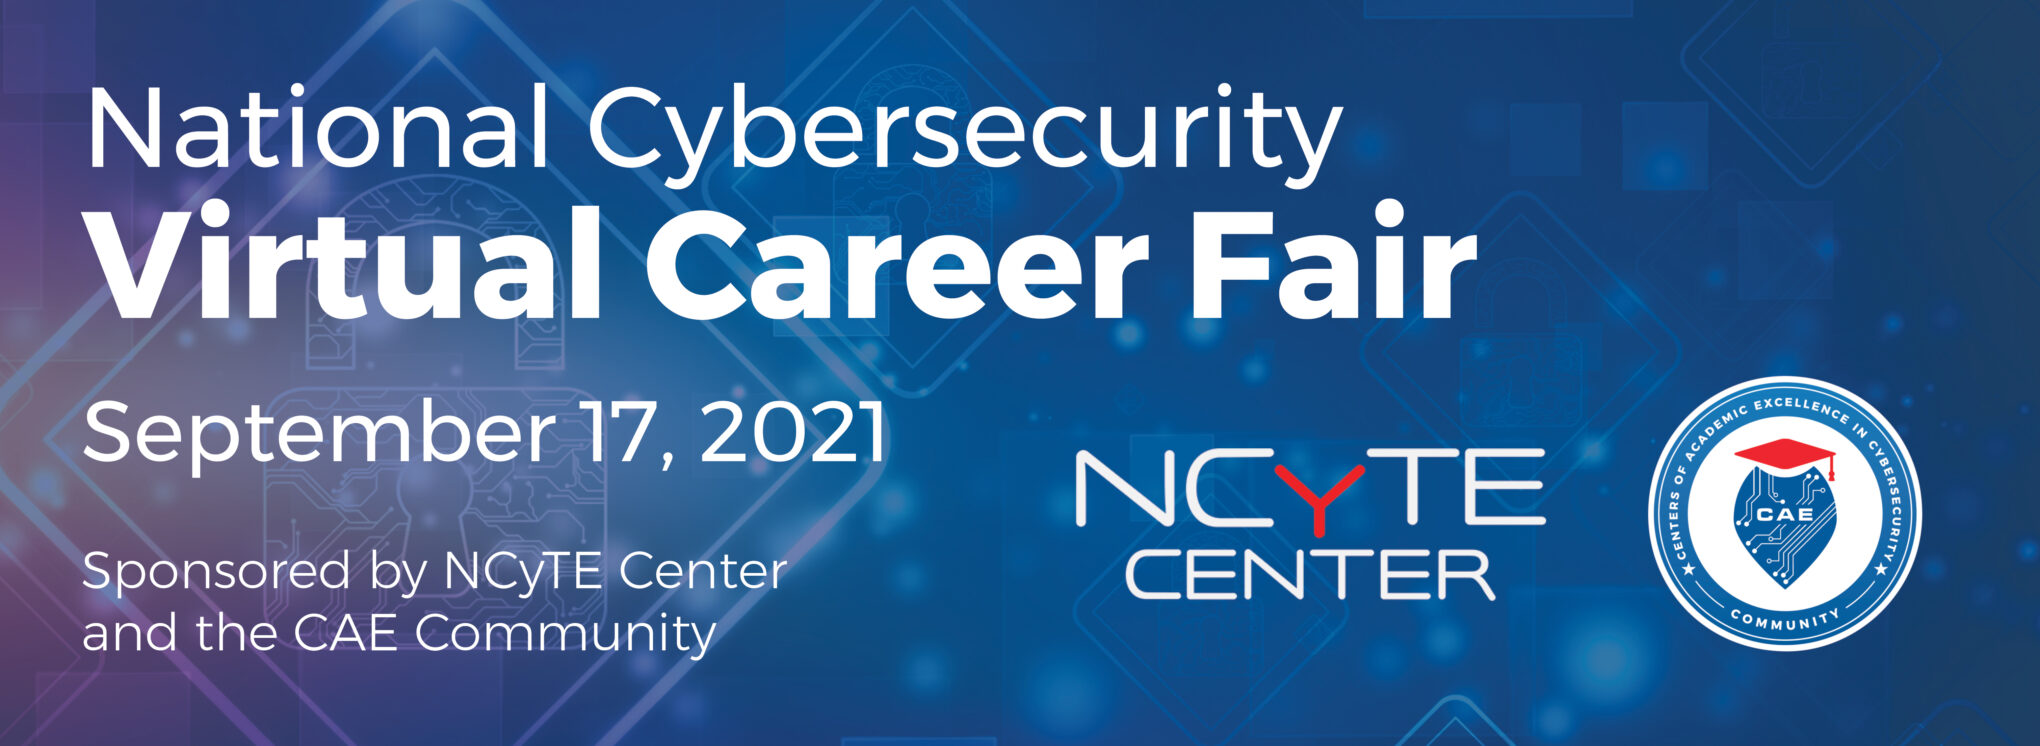 National Cybersecurity Virtual Career Fair September 17, 2021 - National Cybersecurity Student Association